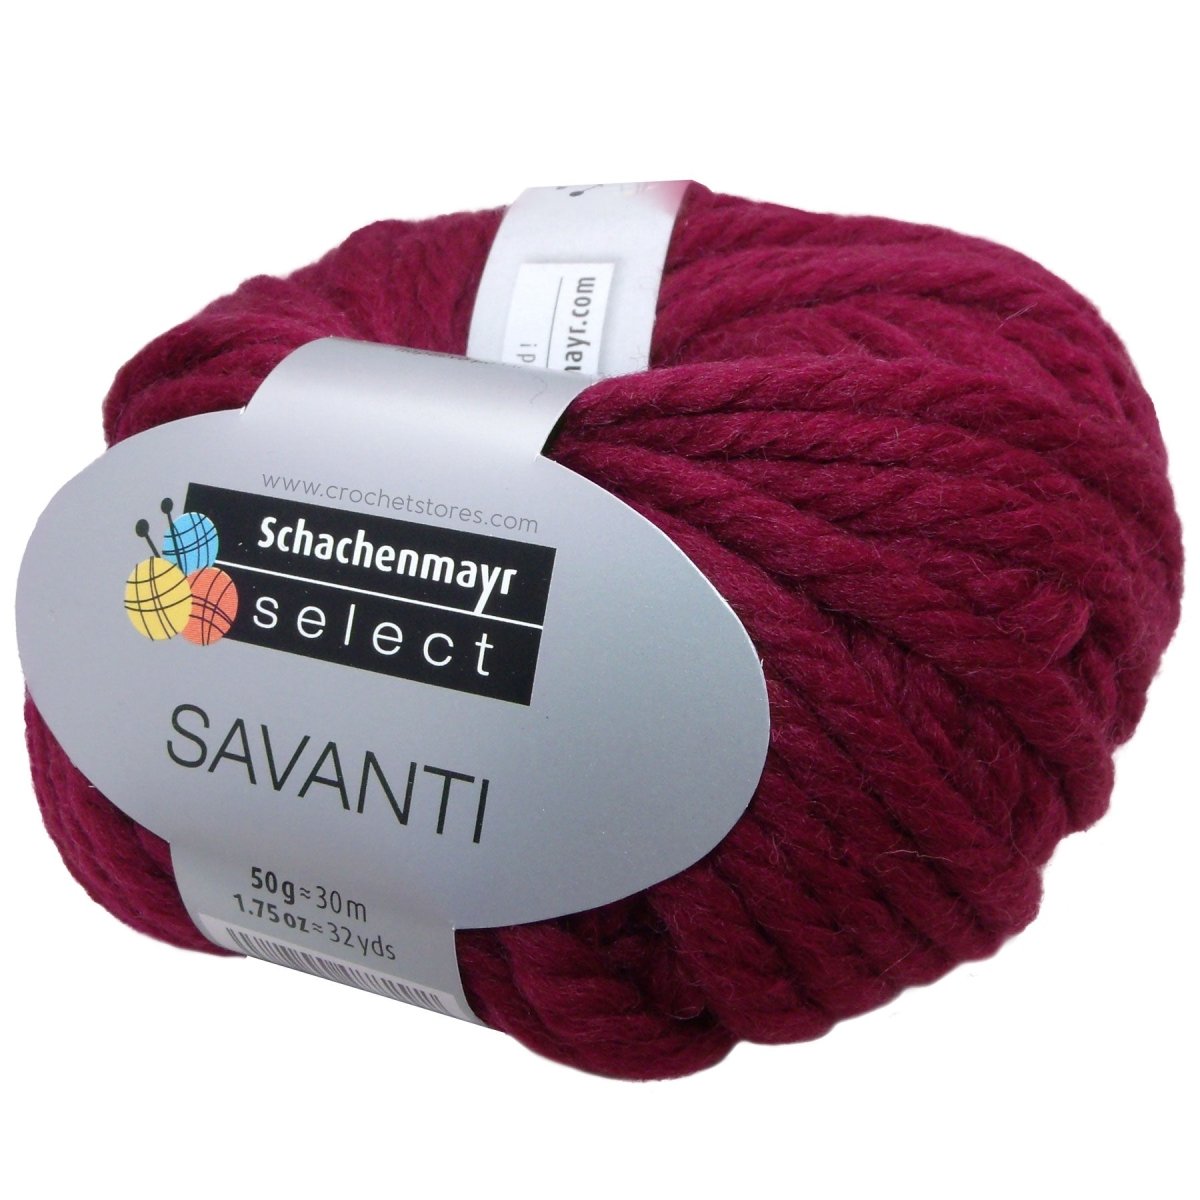 SAVANTI - Crochetstores9811771-47464082700488292